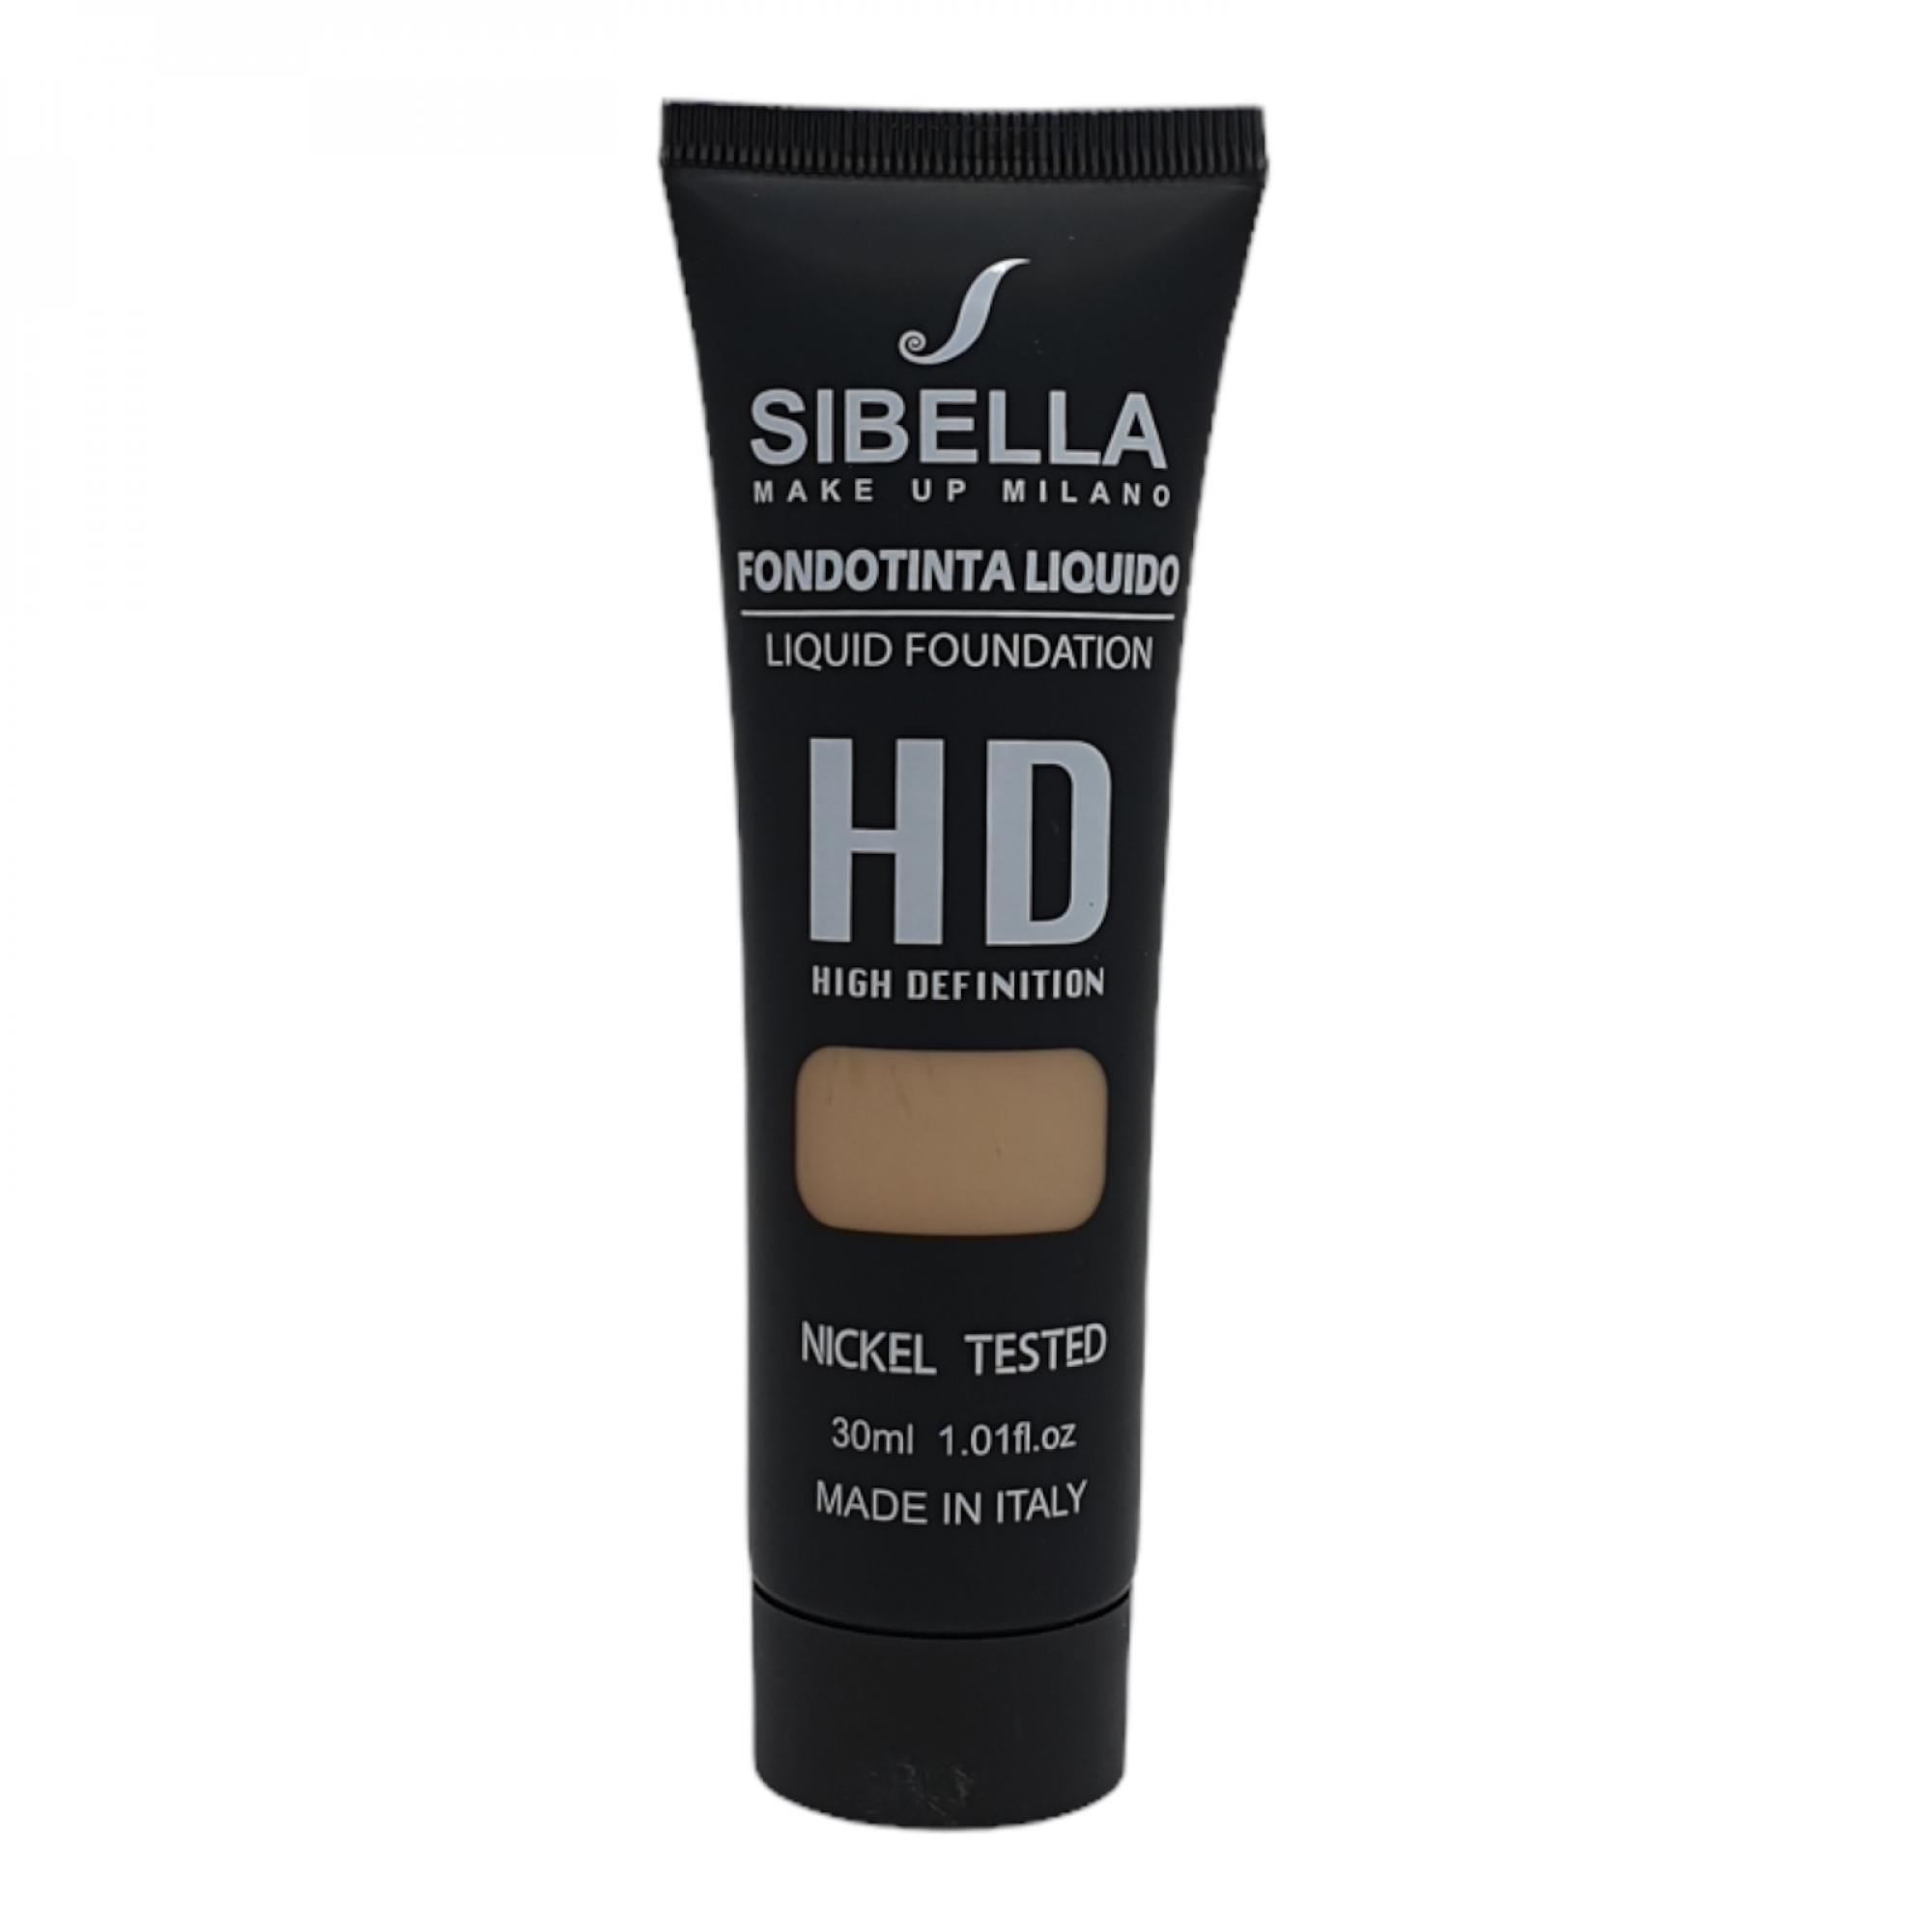 Sibella Liquid Foundation HD Farbauswahl 03